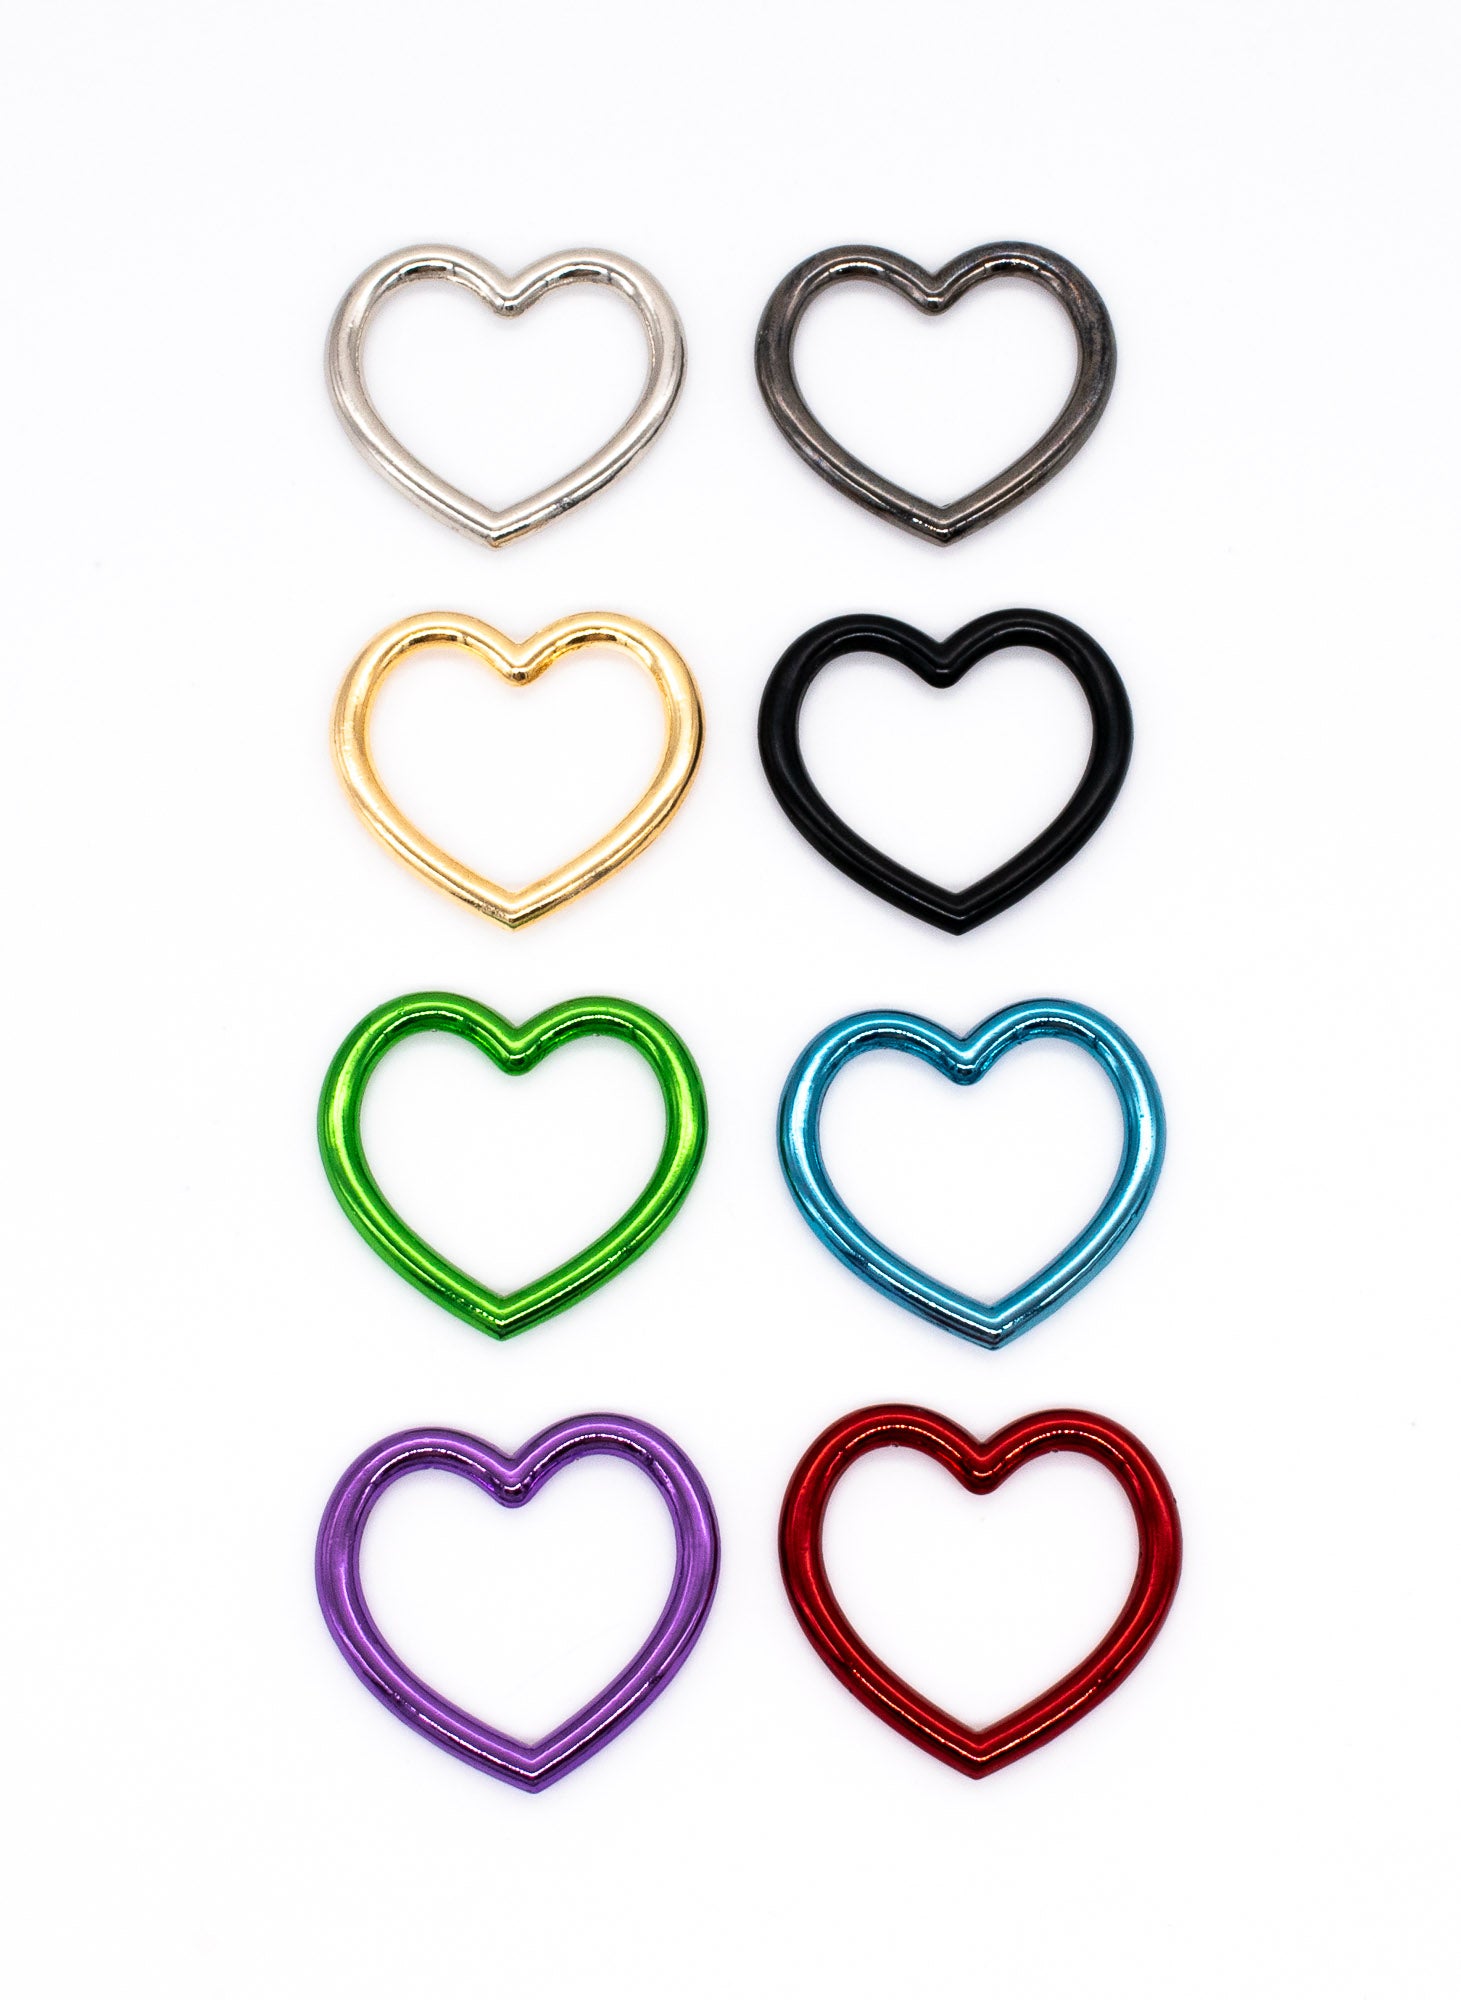 Rainbow Chain Purple Heart Slip Chain Collar